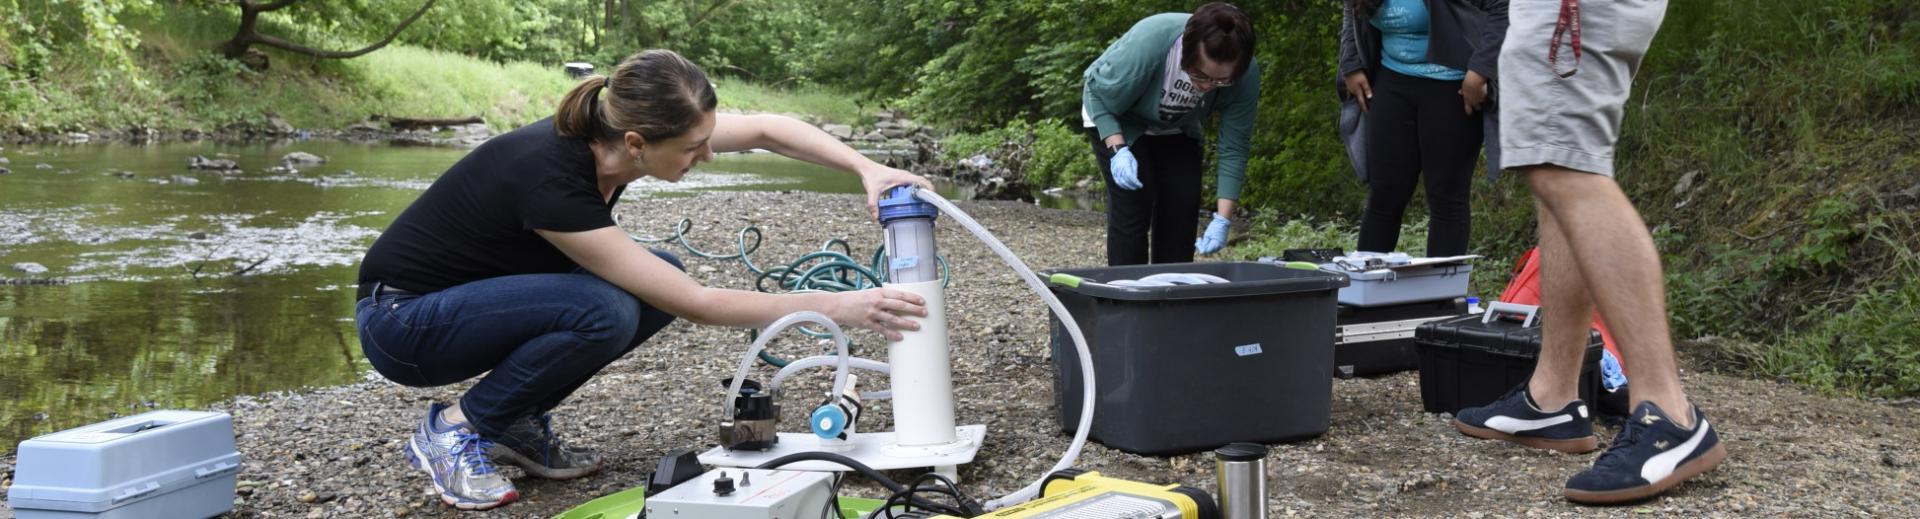 Environmental health class testing river water